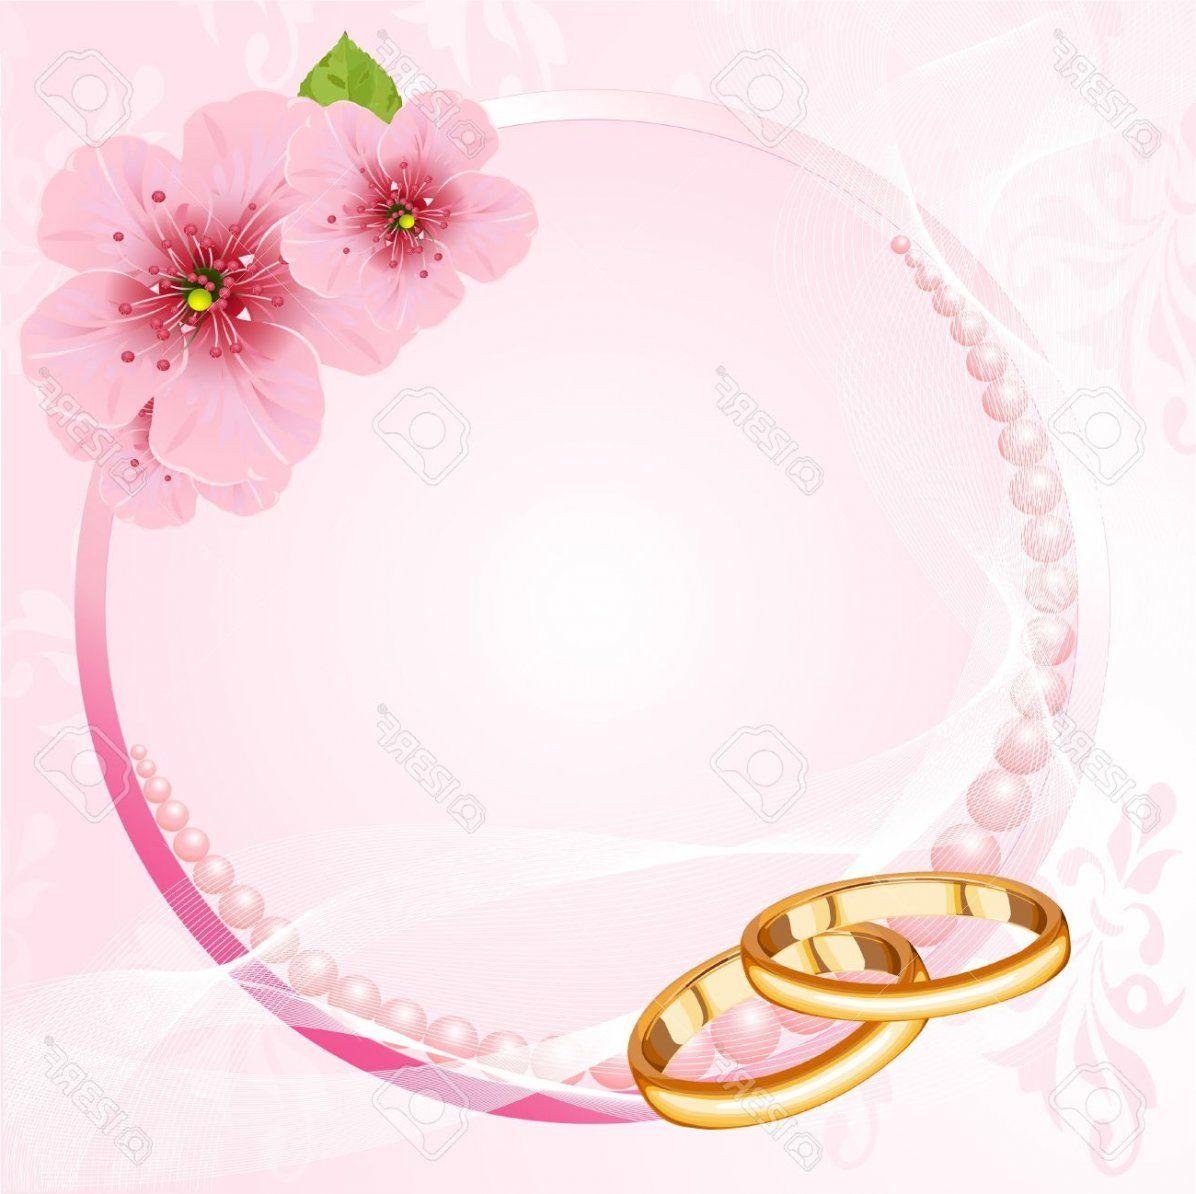 Nice Background Of Wedding Invitation Designs Wedding Rings